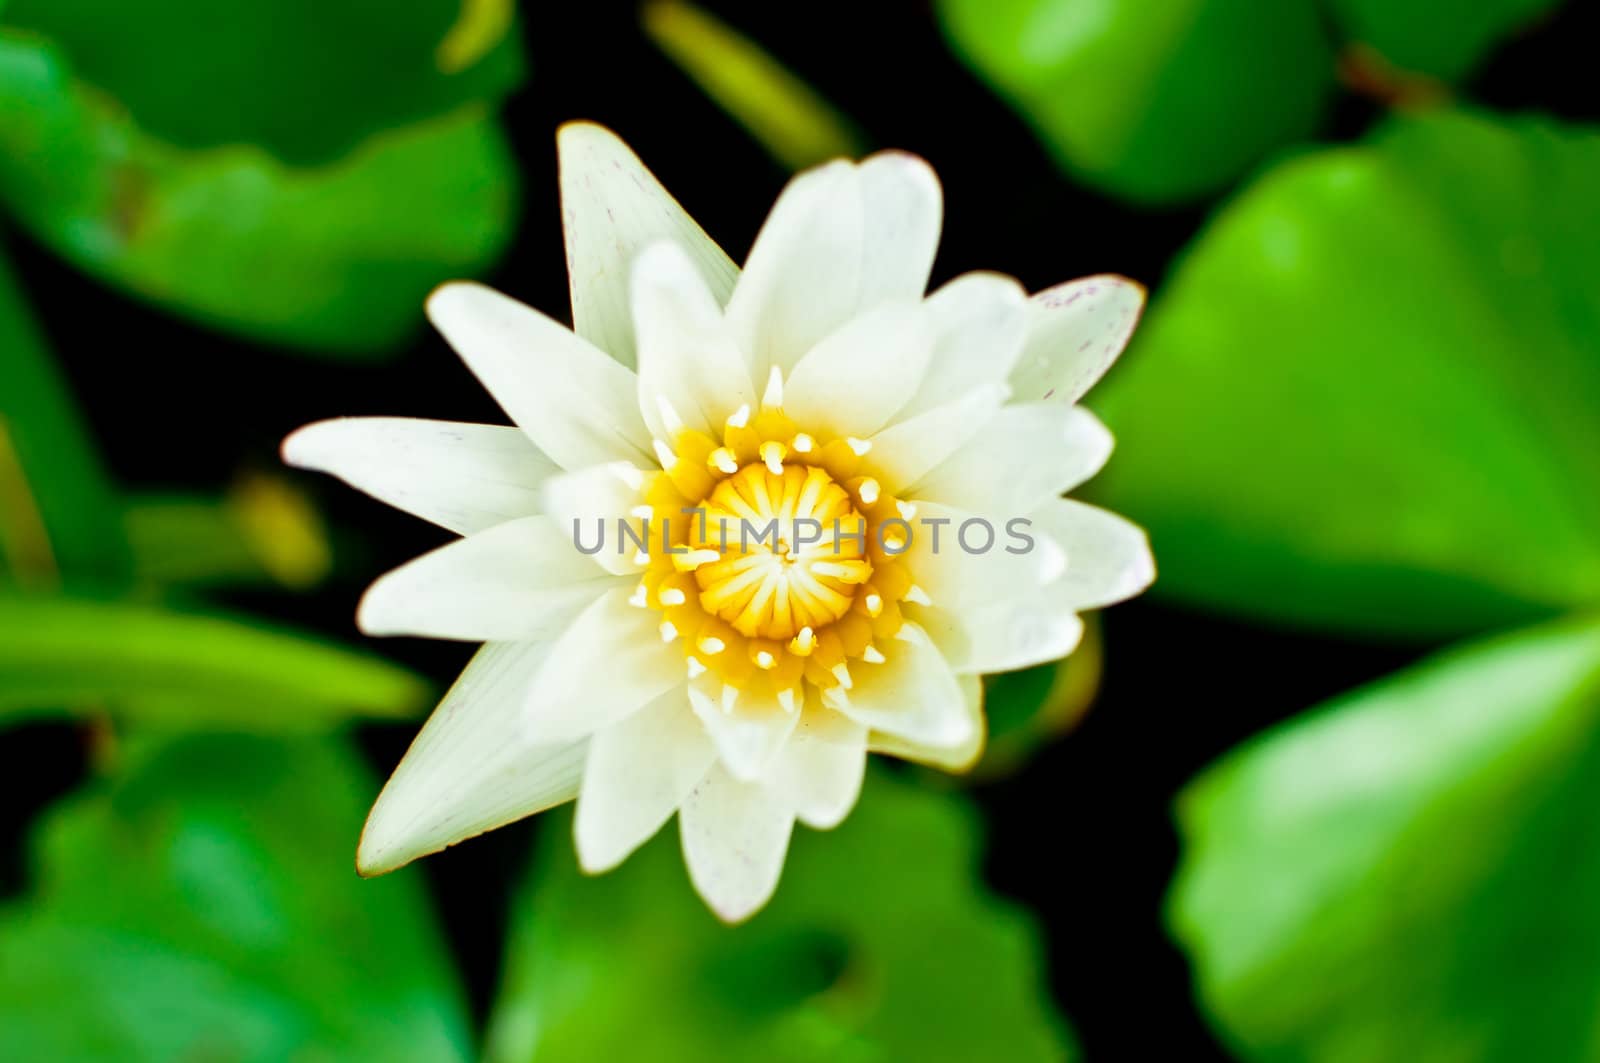 White lotus selective focus on pollen